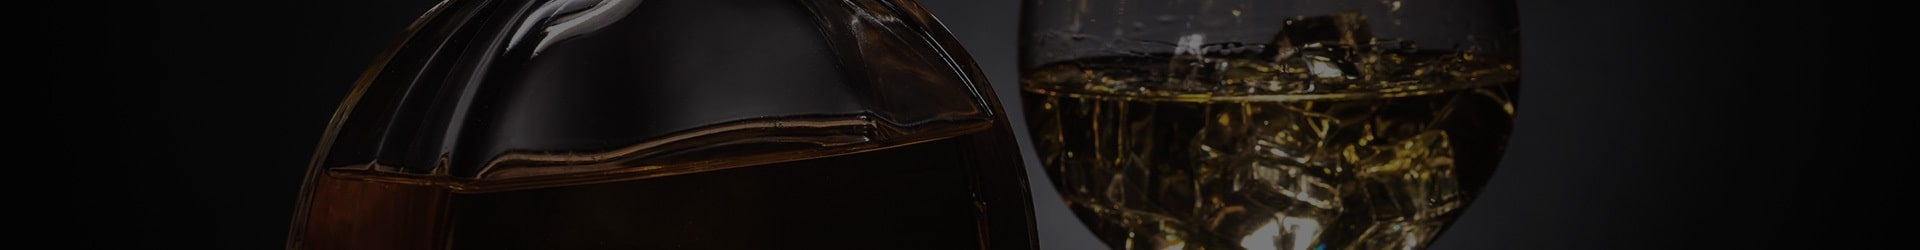 Our Selection of Luxury Cognac|Shop Online